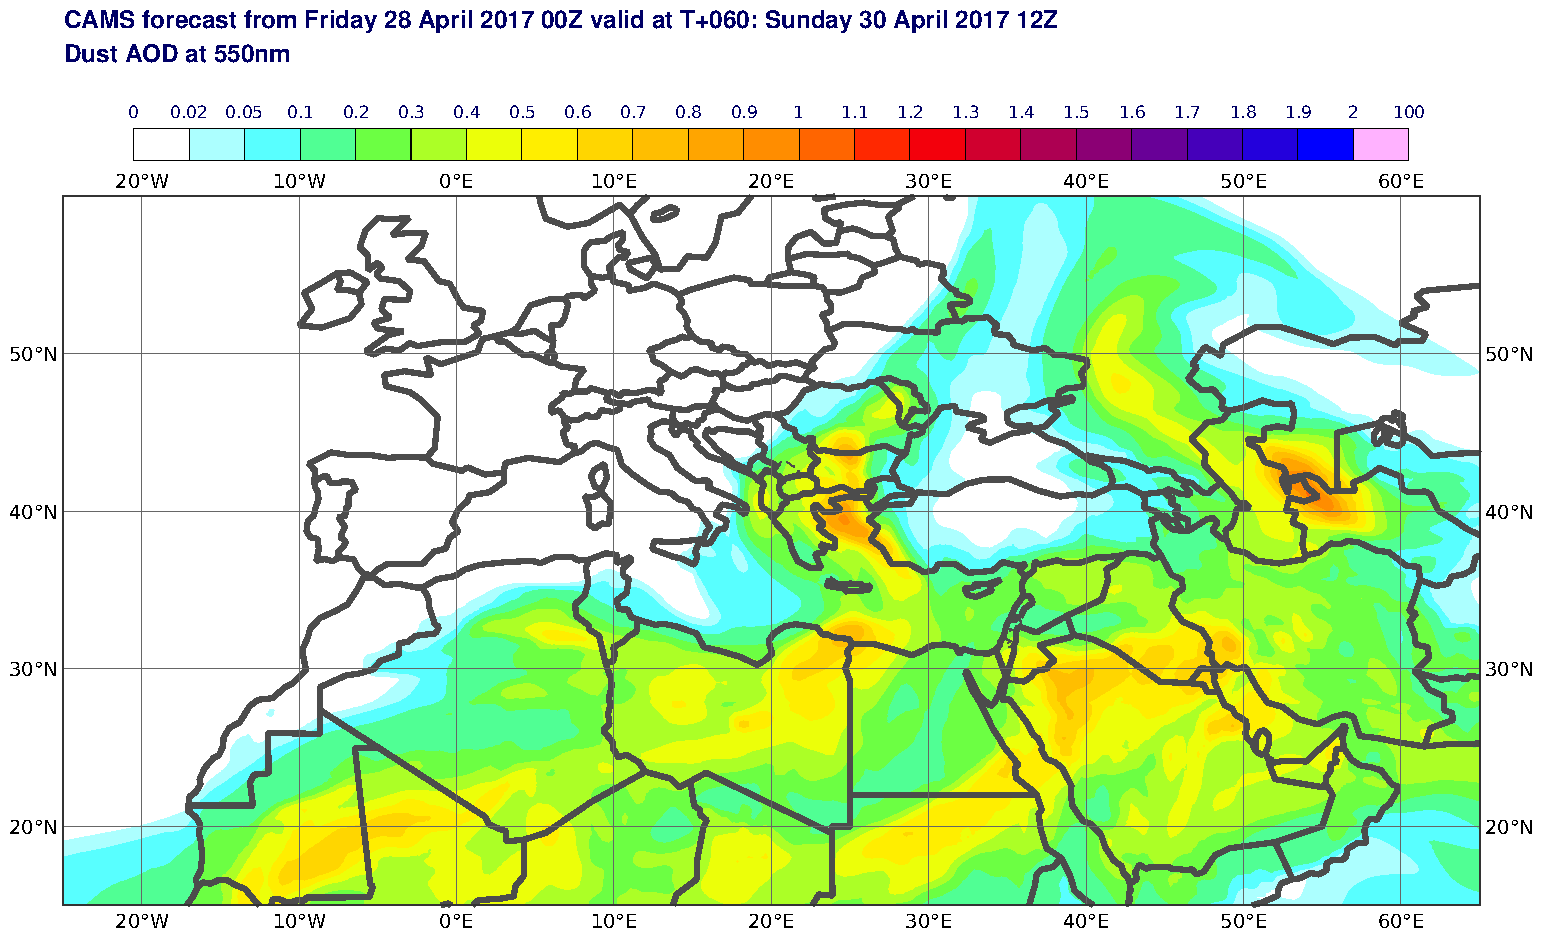 Dust AOD at 550nm valid at T60 - 2017-04-30 12:00